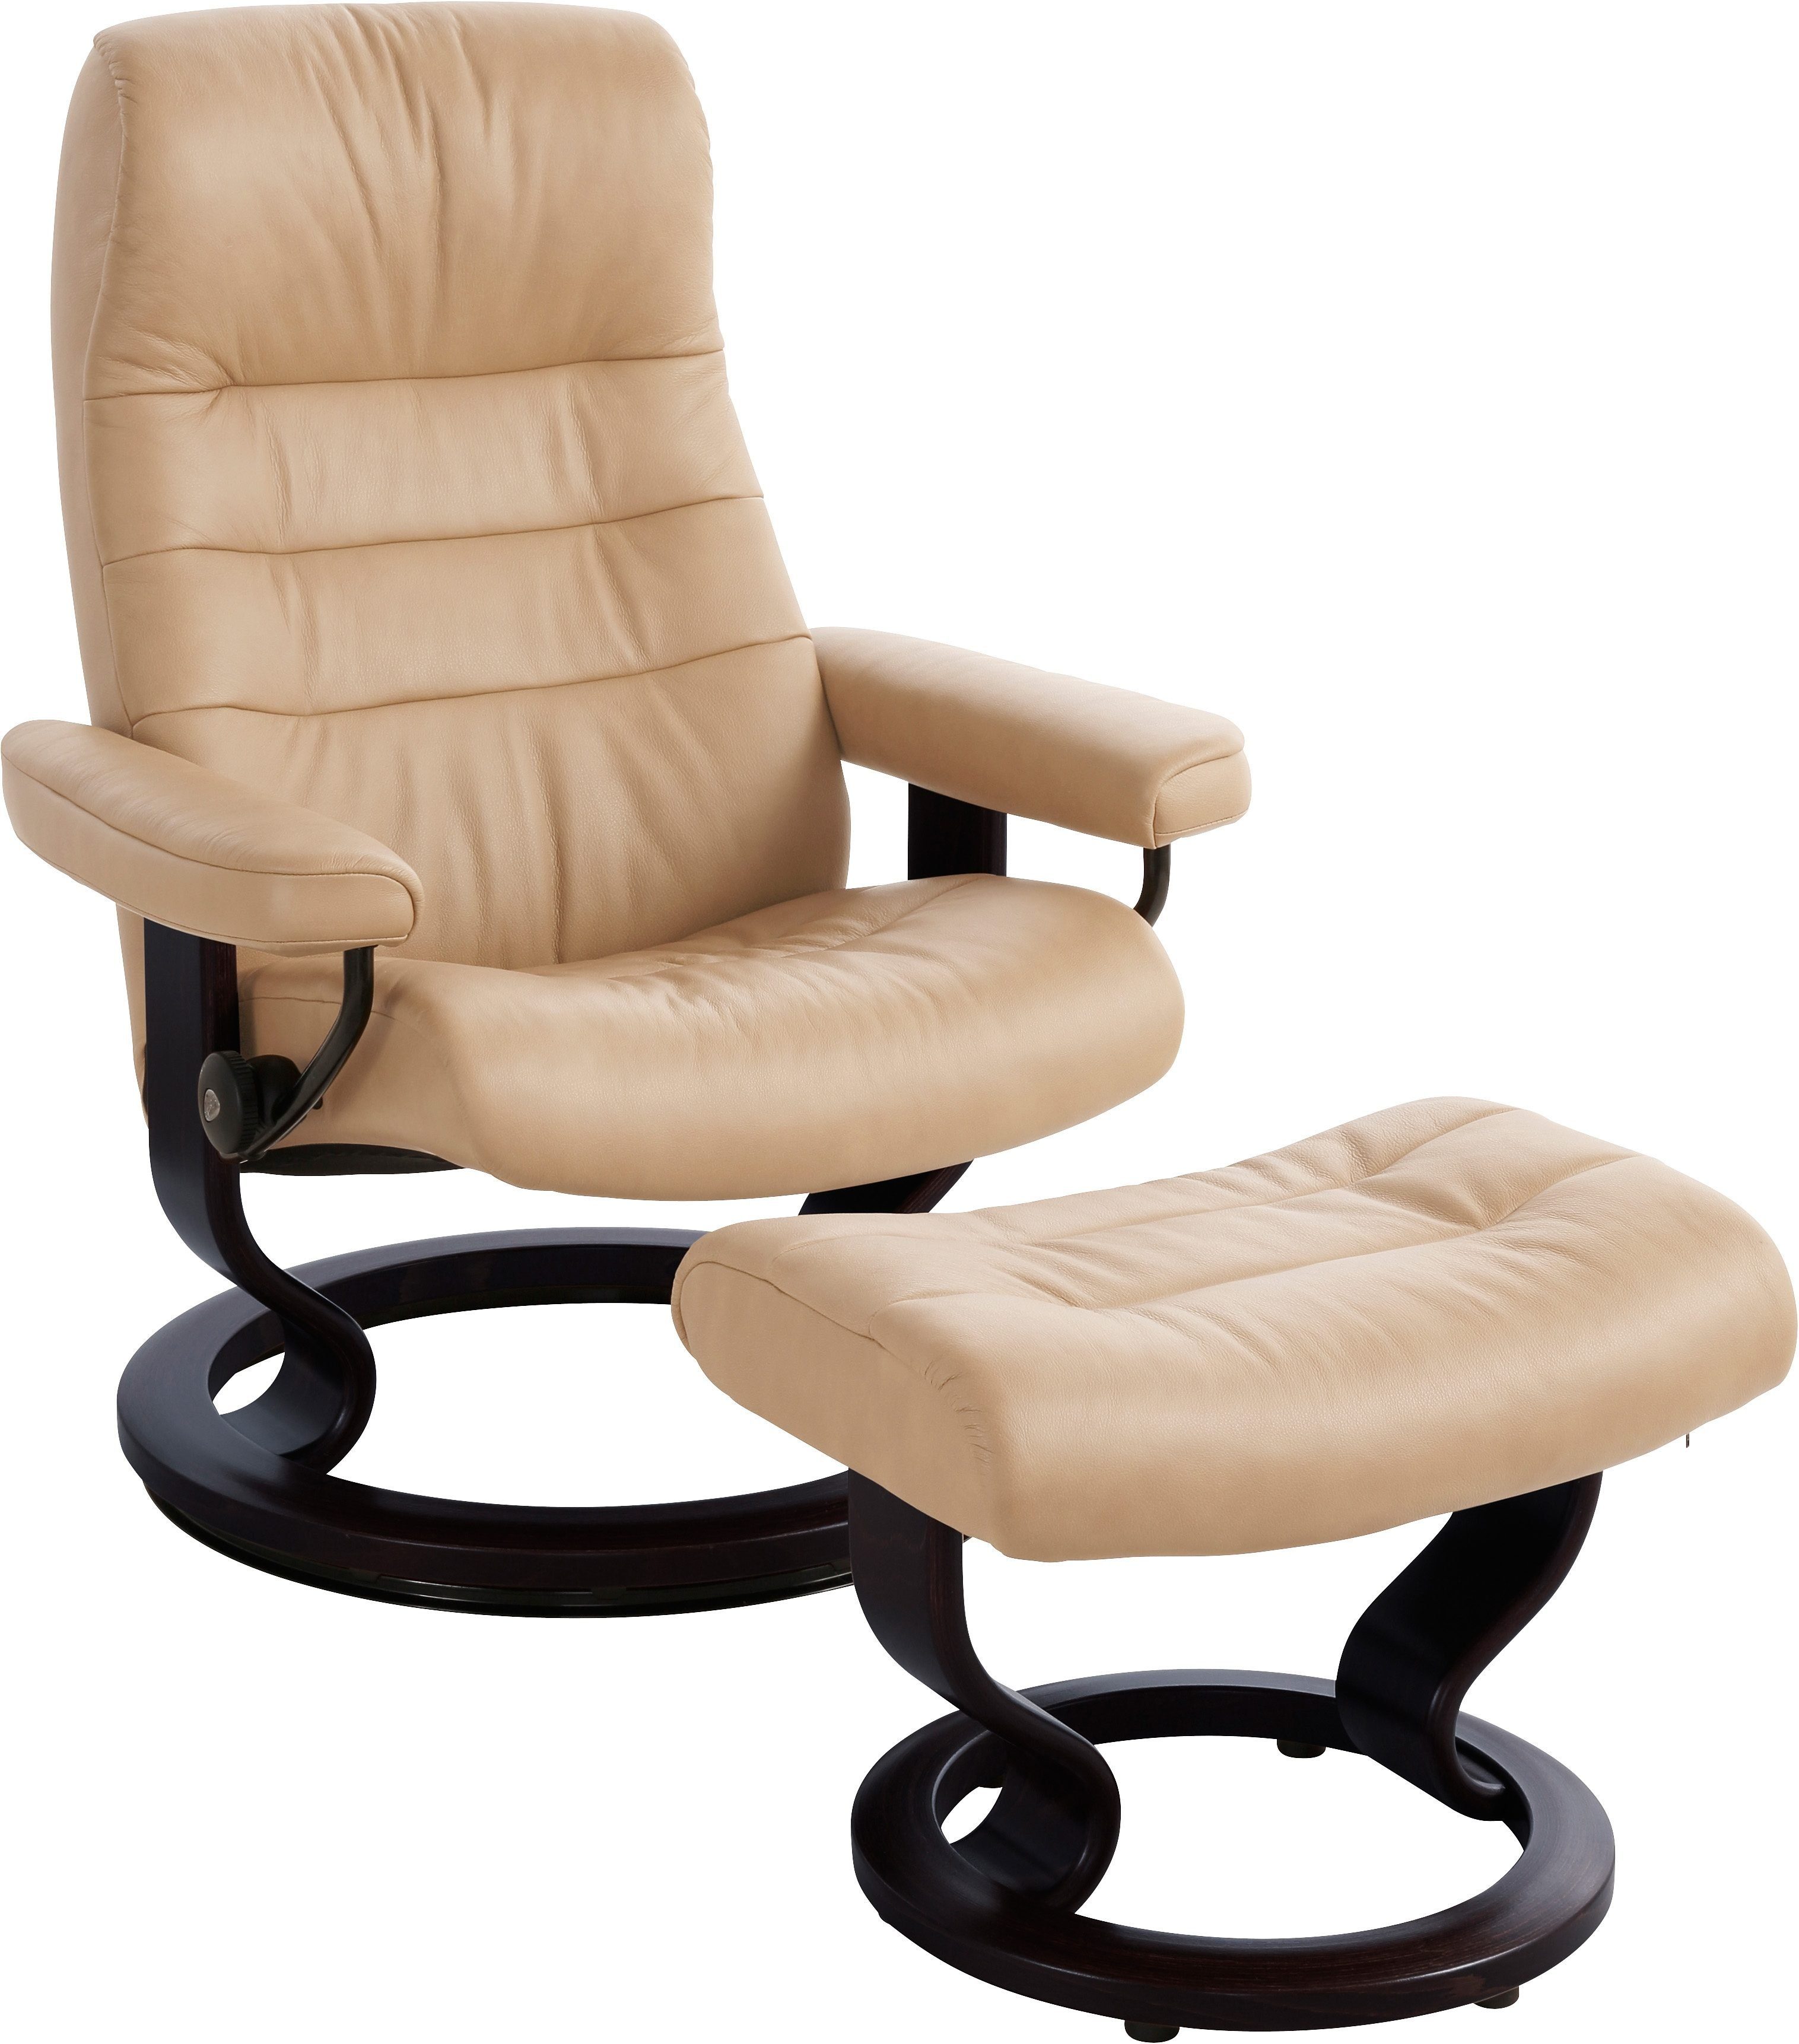 Stressless Sunrise Sessel online kaufen | OTTO